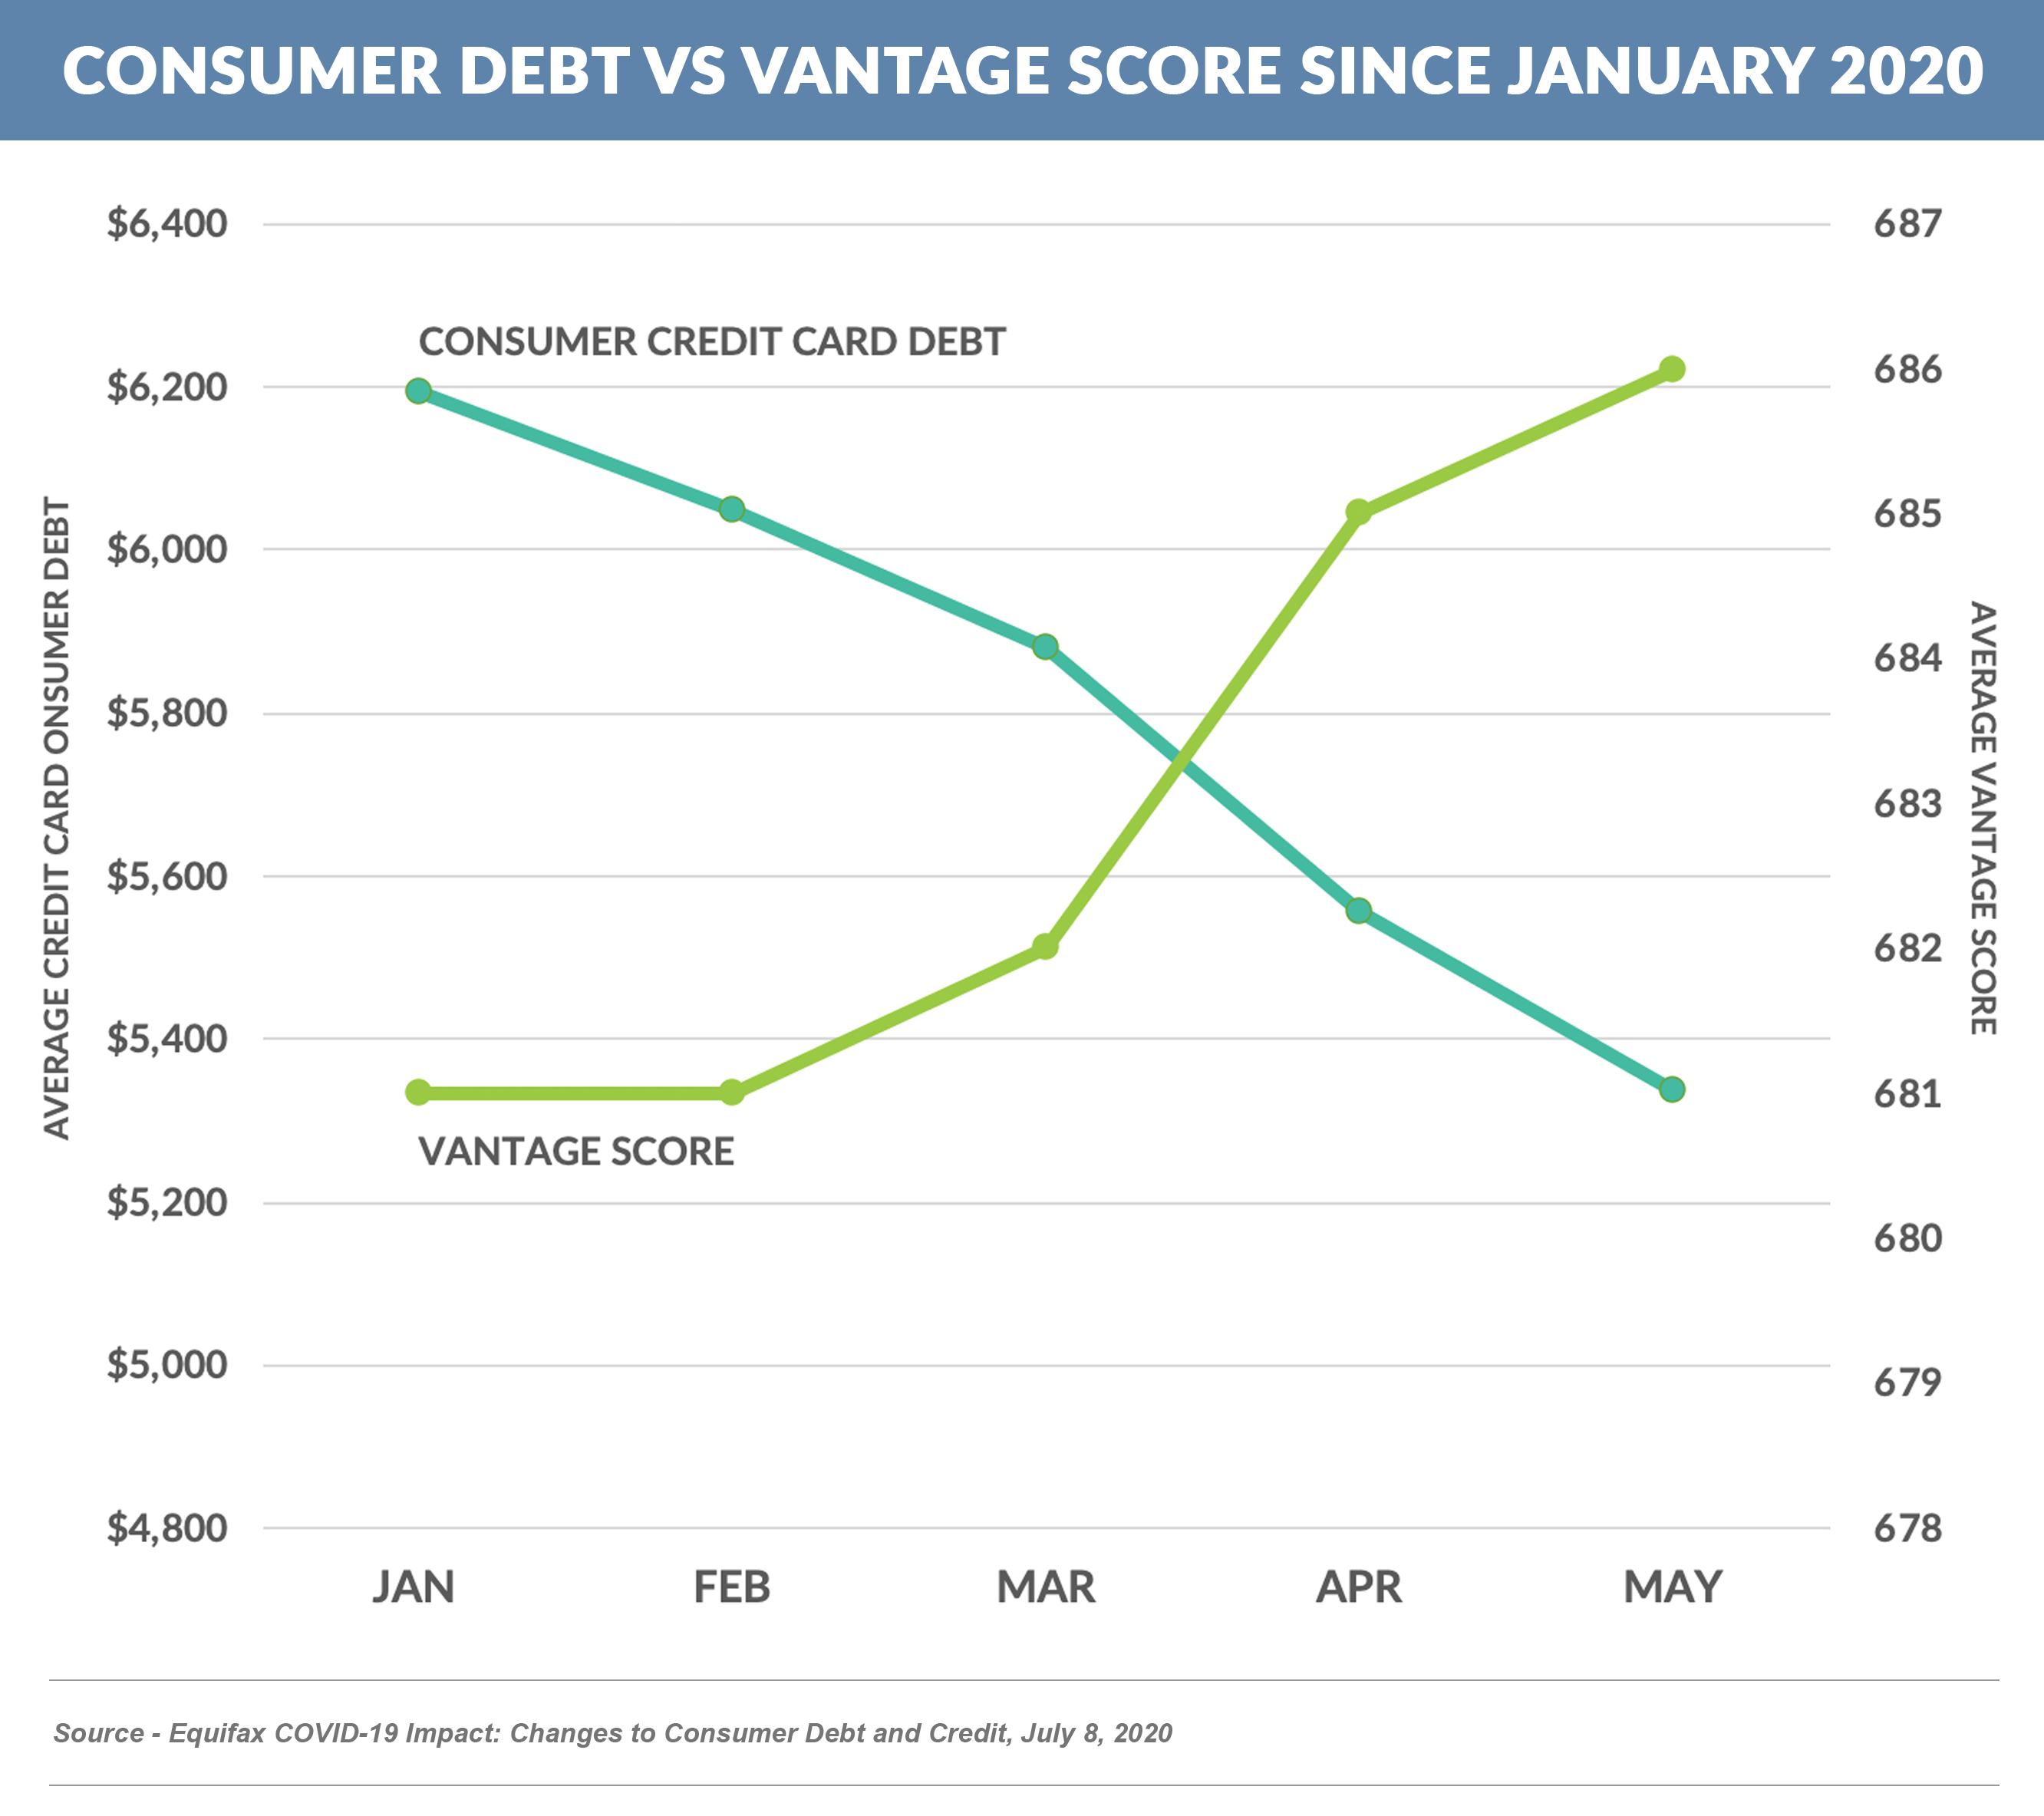 consumer debt vs vantage score since January 2020